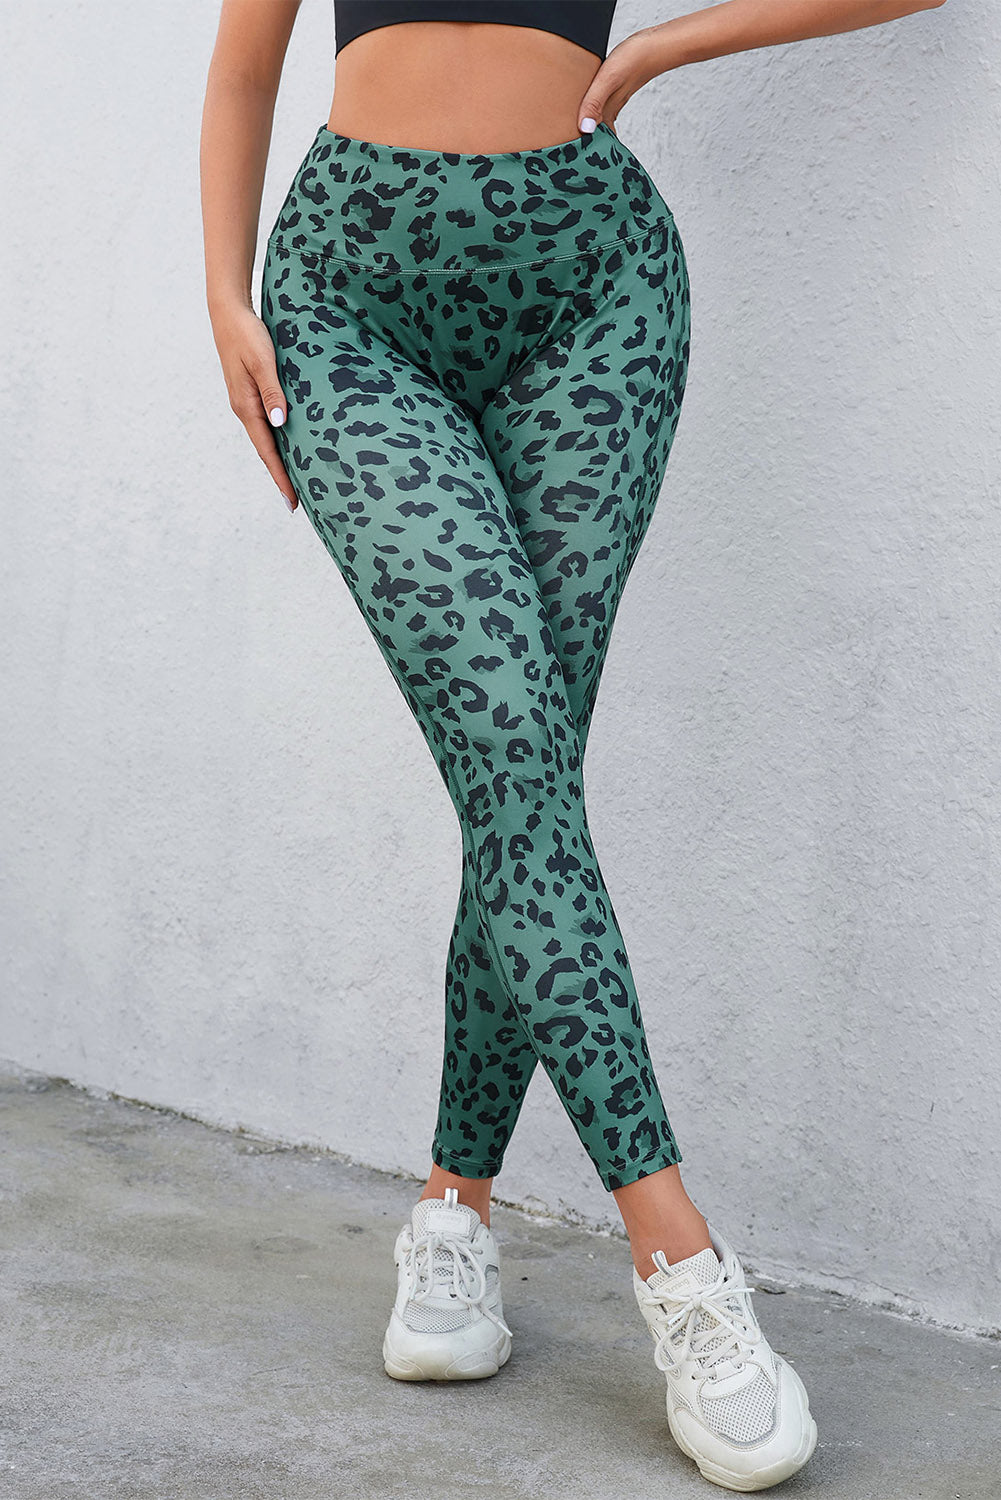 Classic Leopard Green Print Active Leggings